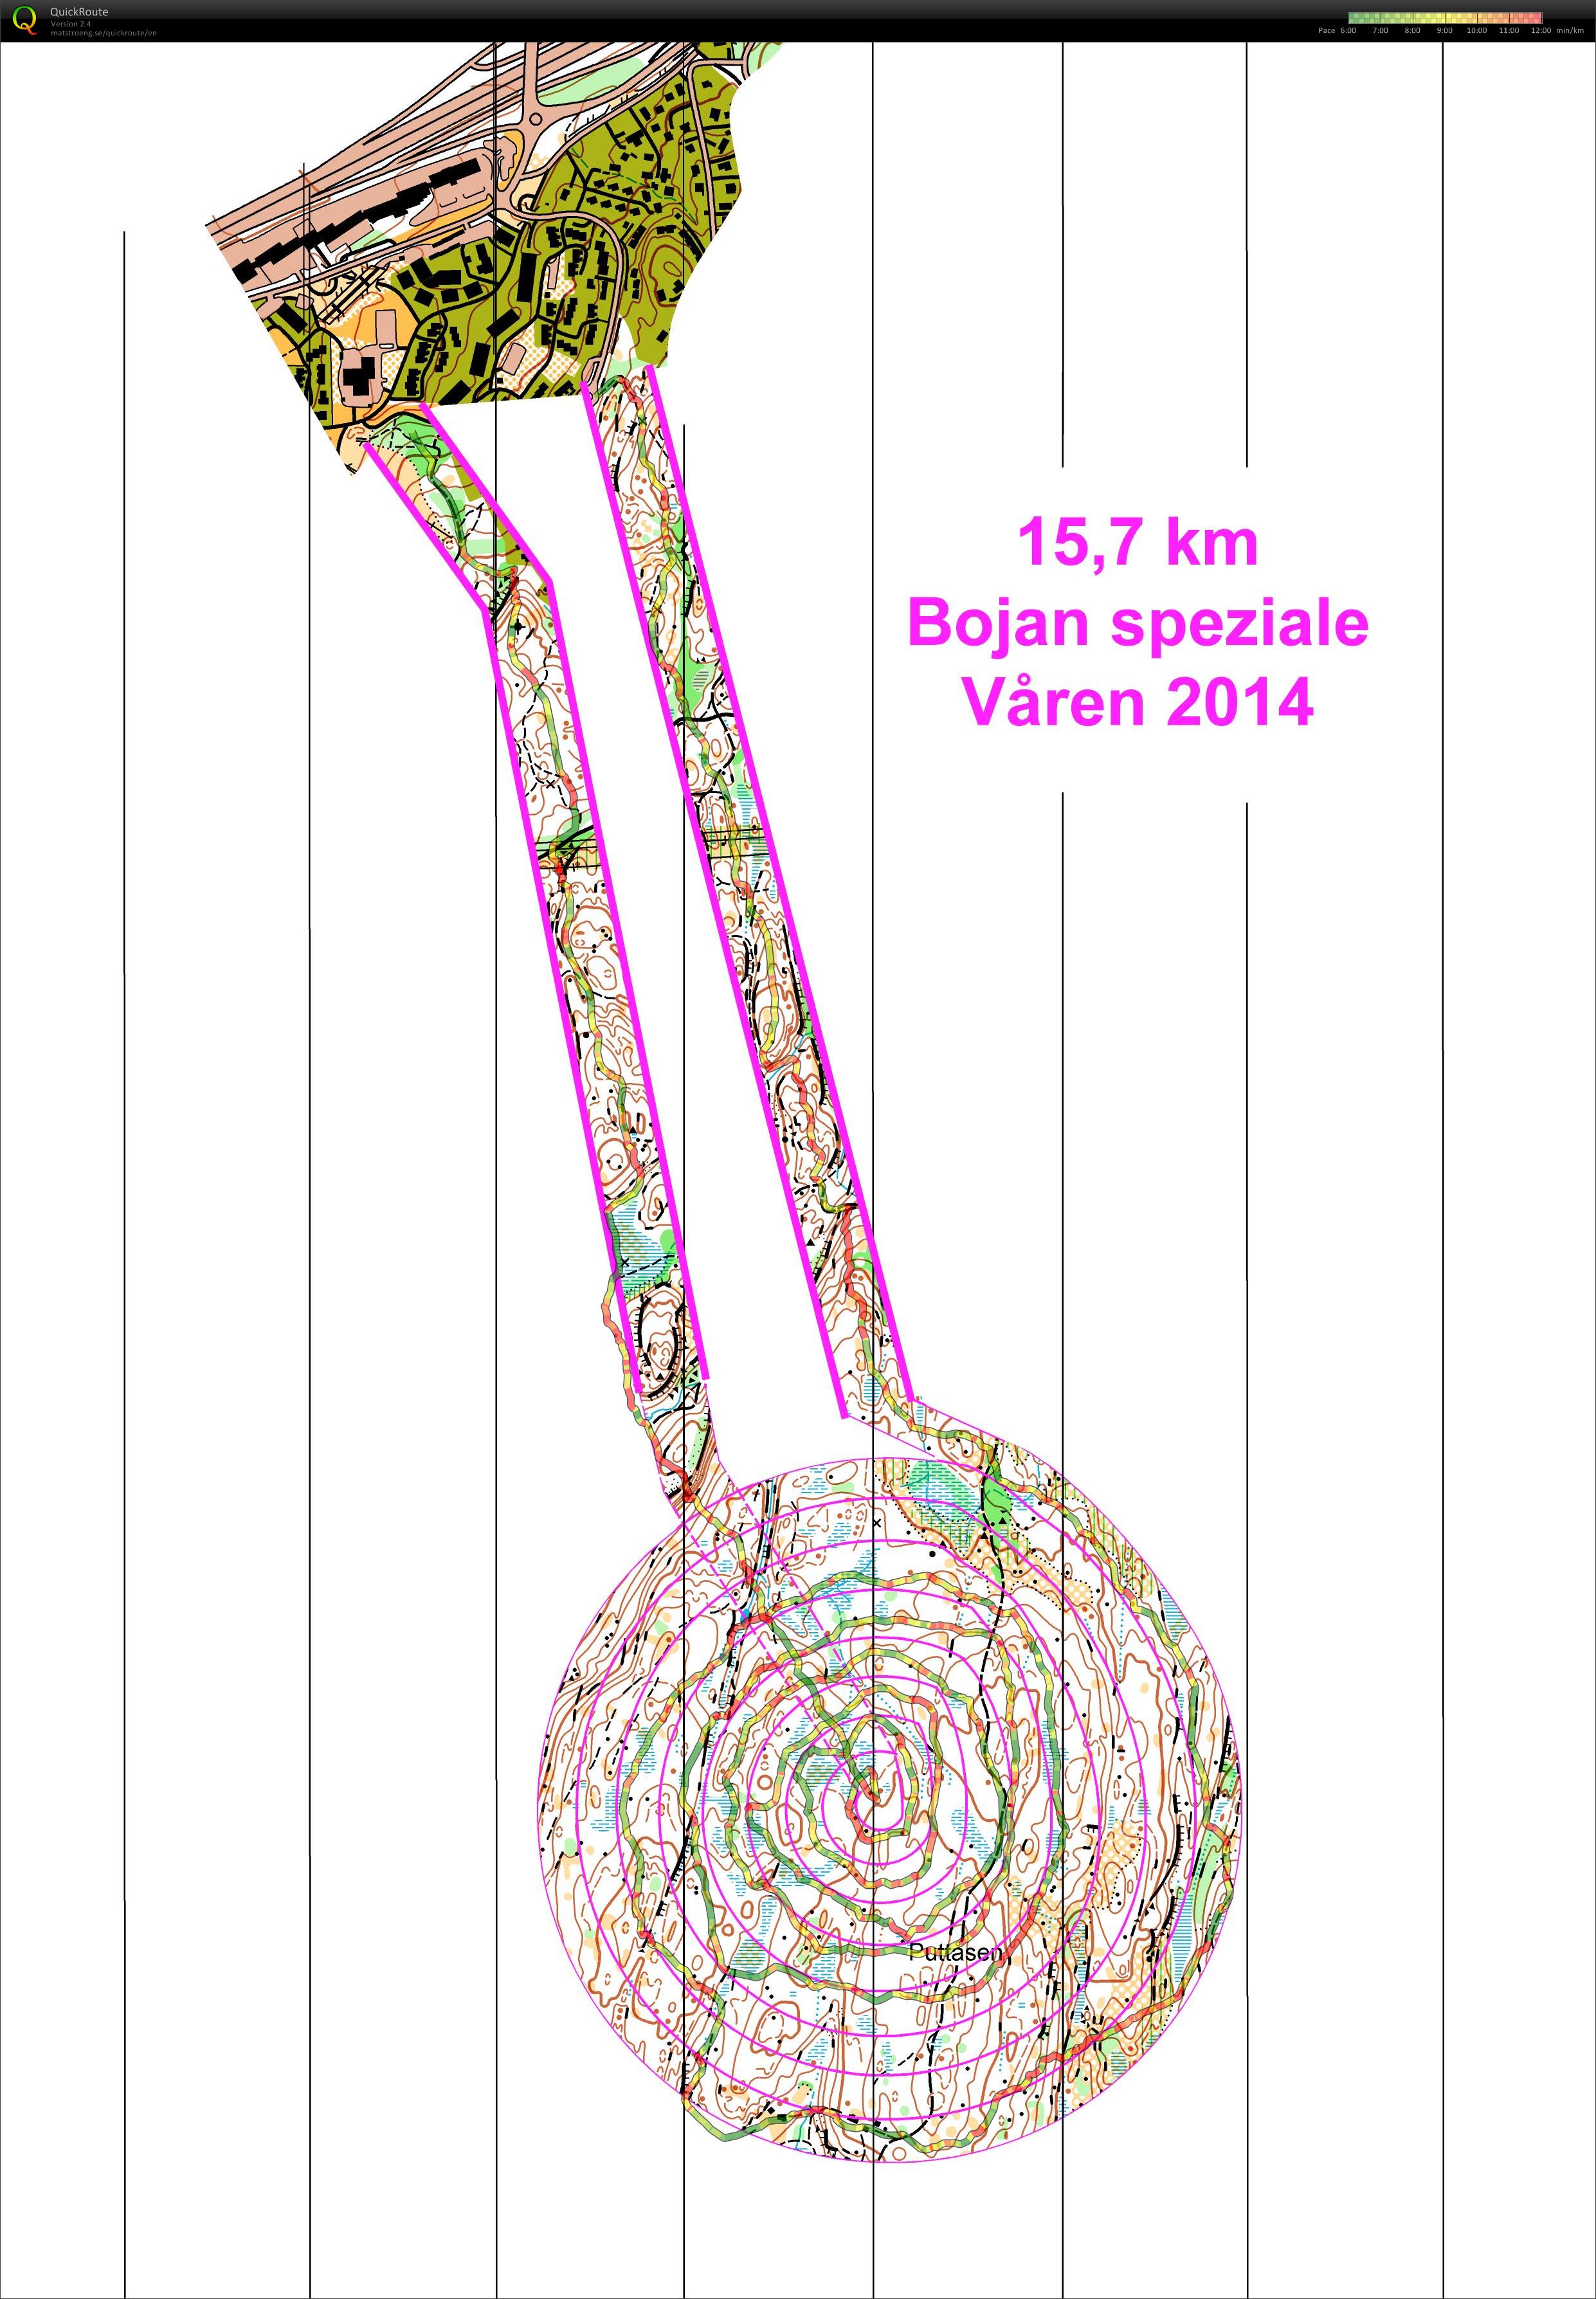 Bojan speziale (01/04/2014)